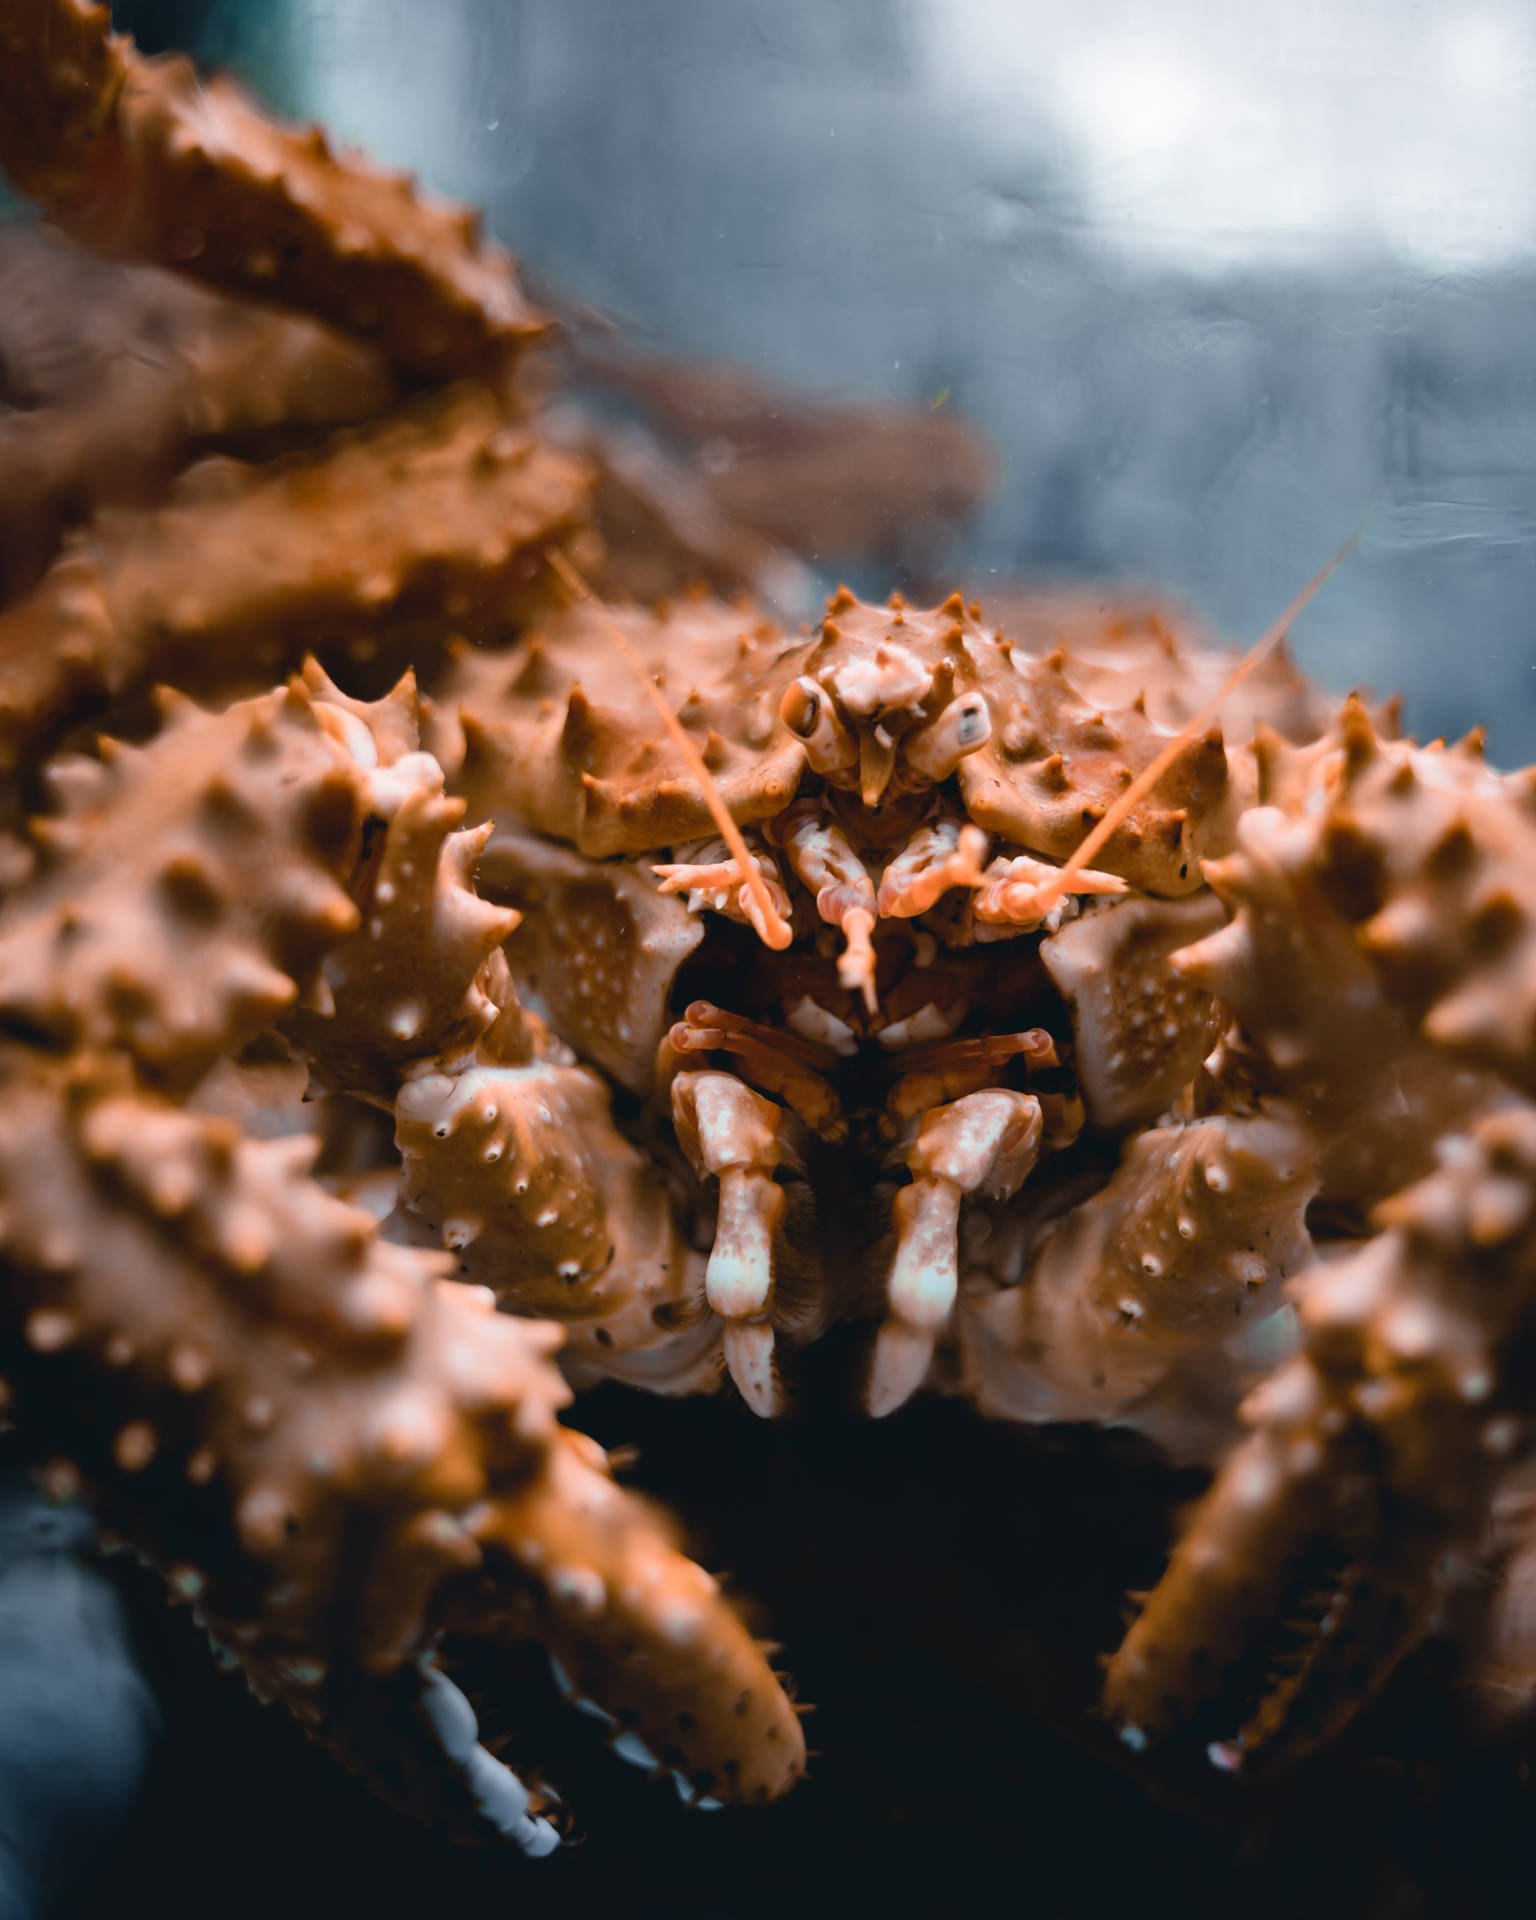 King Crab Face Close-Up Wallpaper